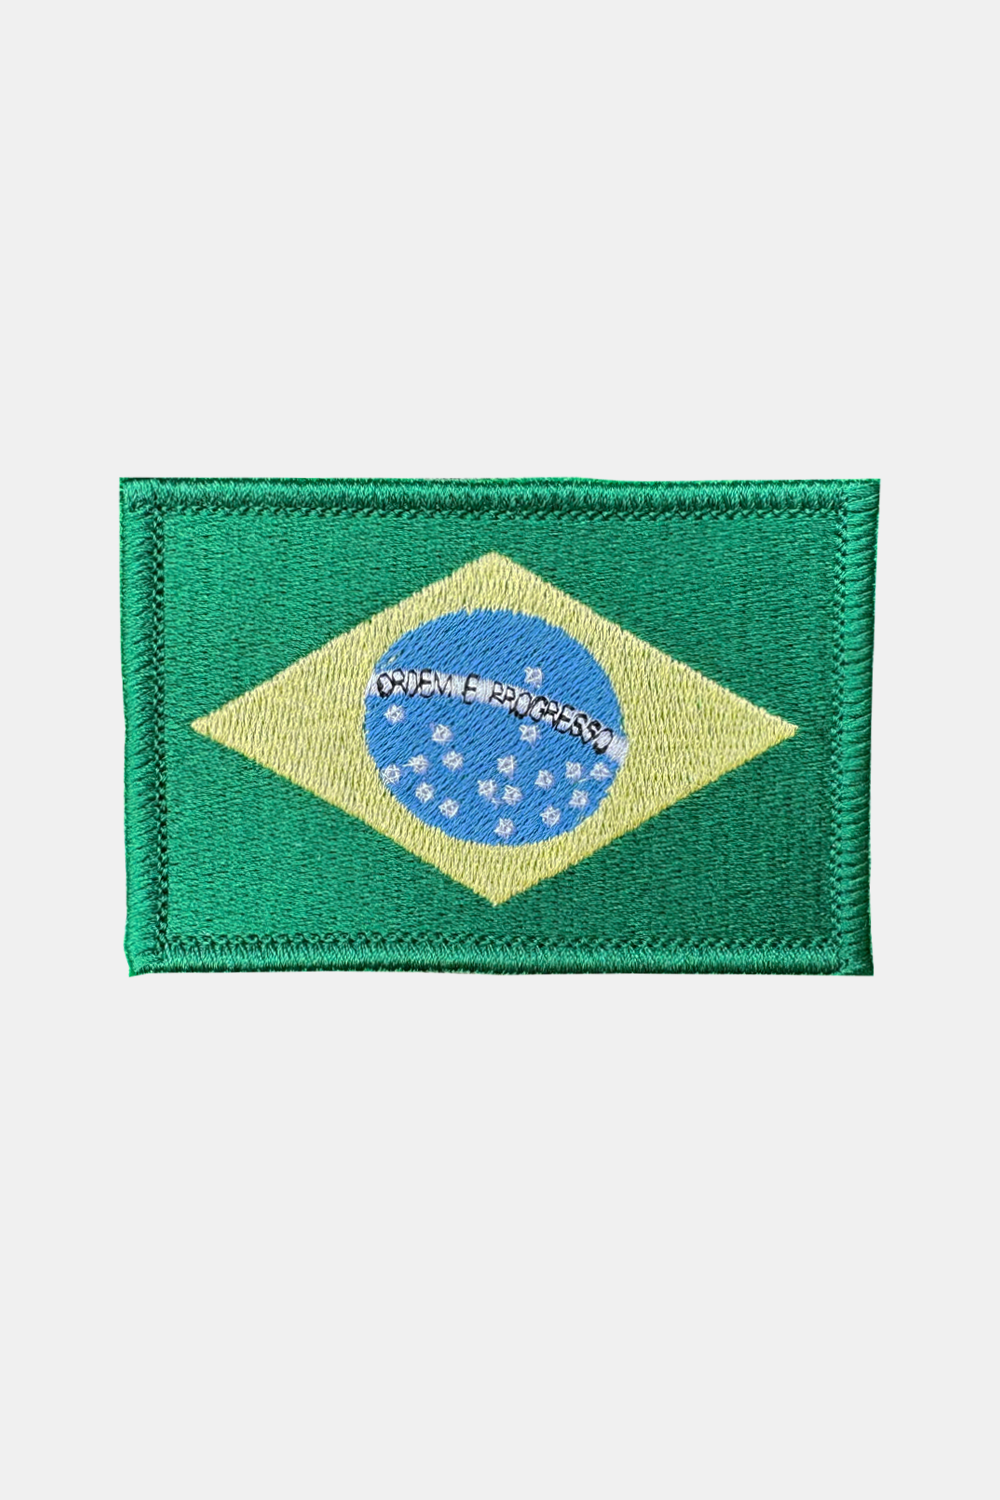 Patch Brasil Flag - Orbital Company